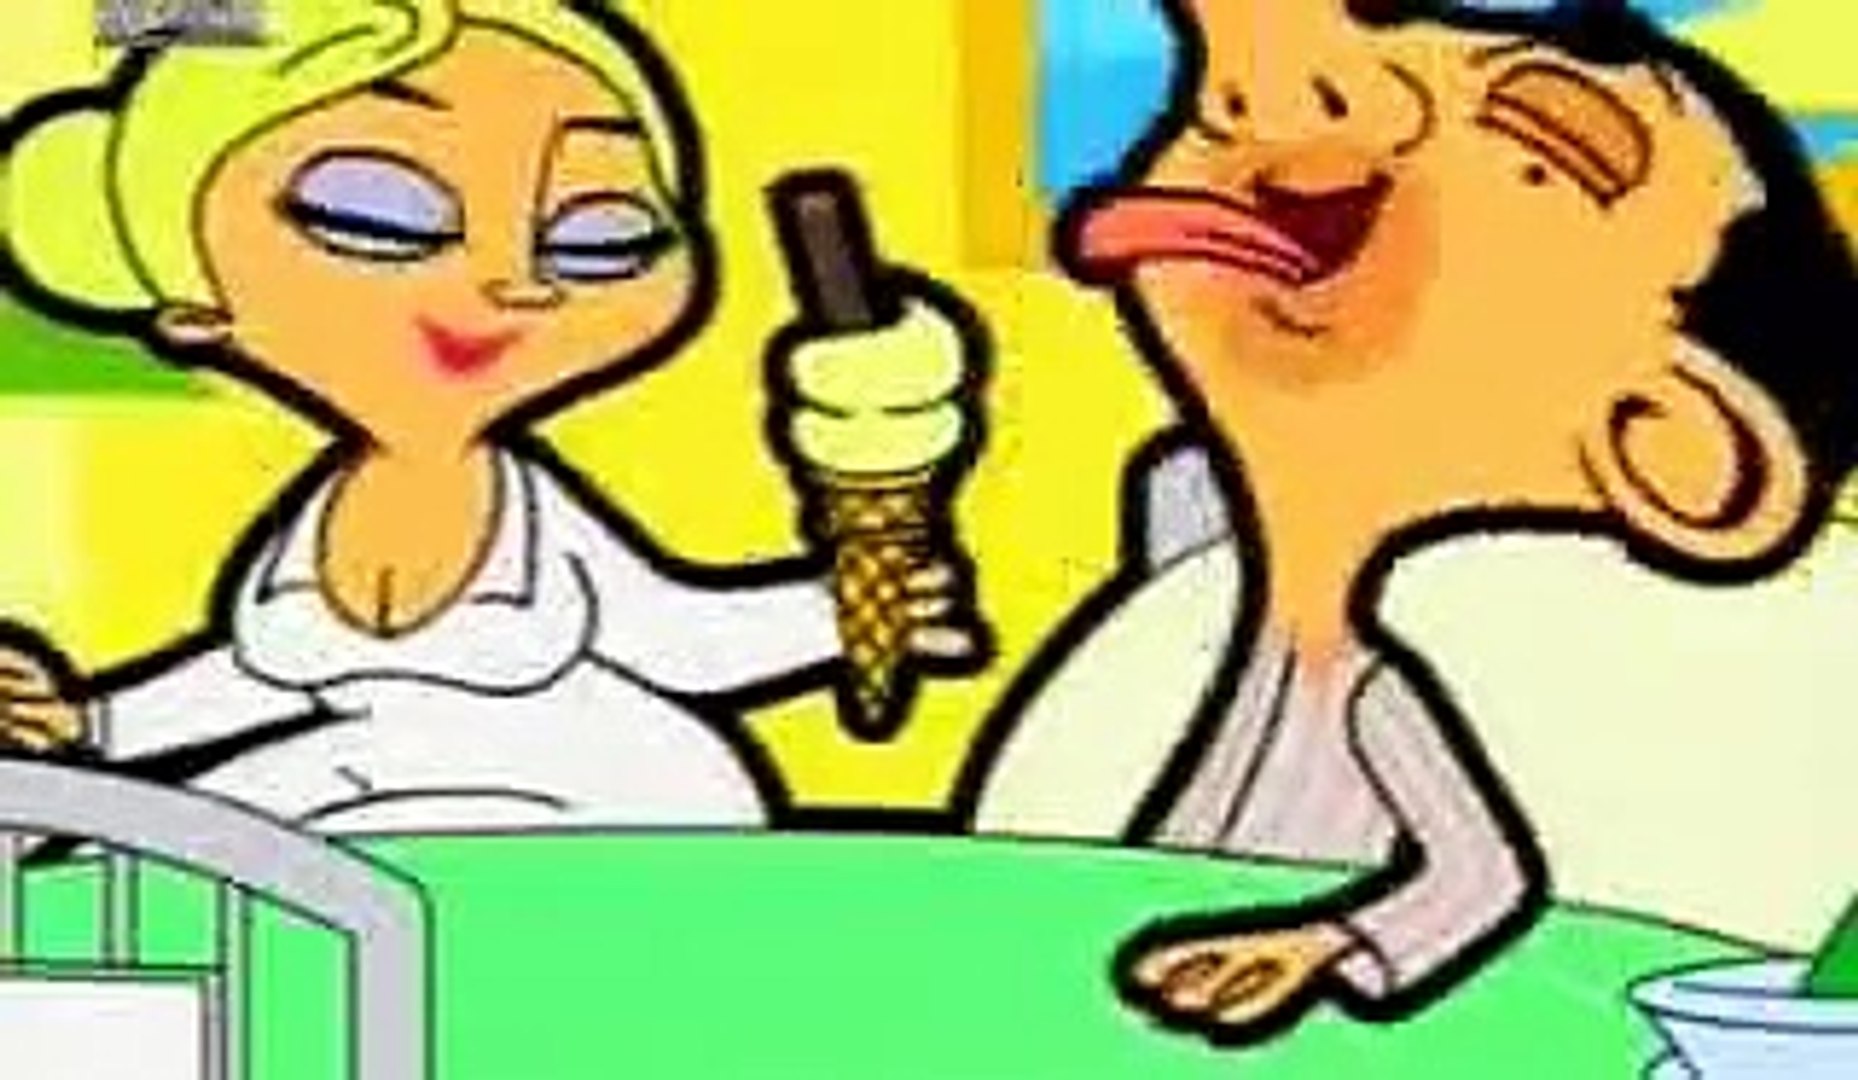 Mr Bean Animated nurse - Dailymotion Video